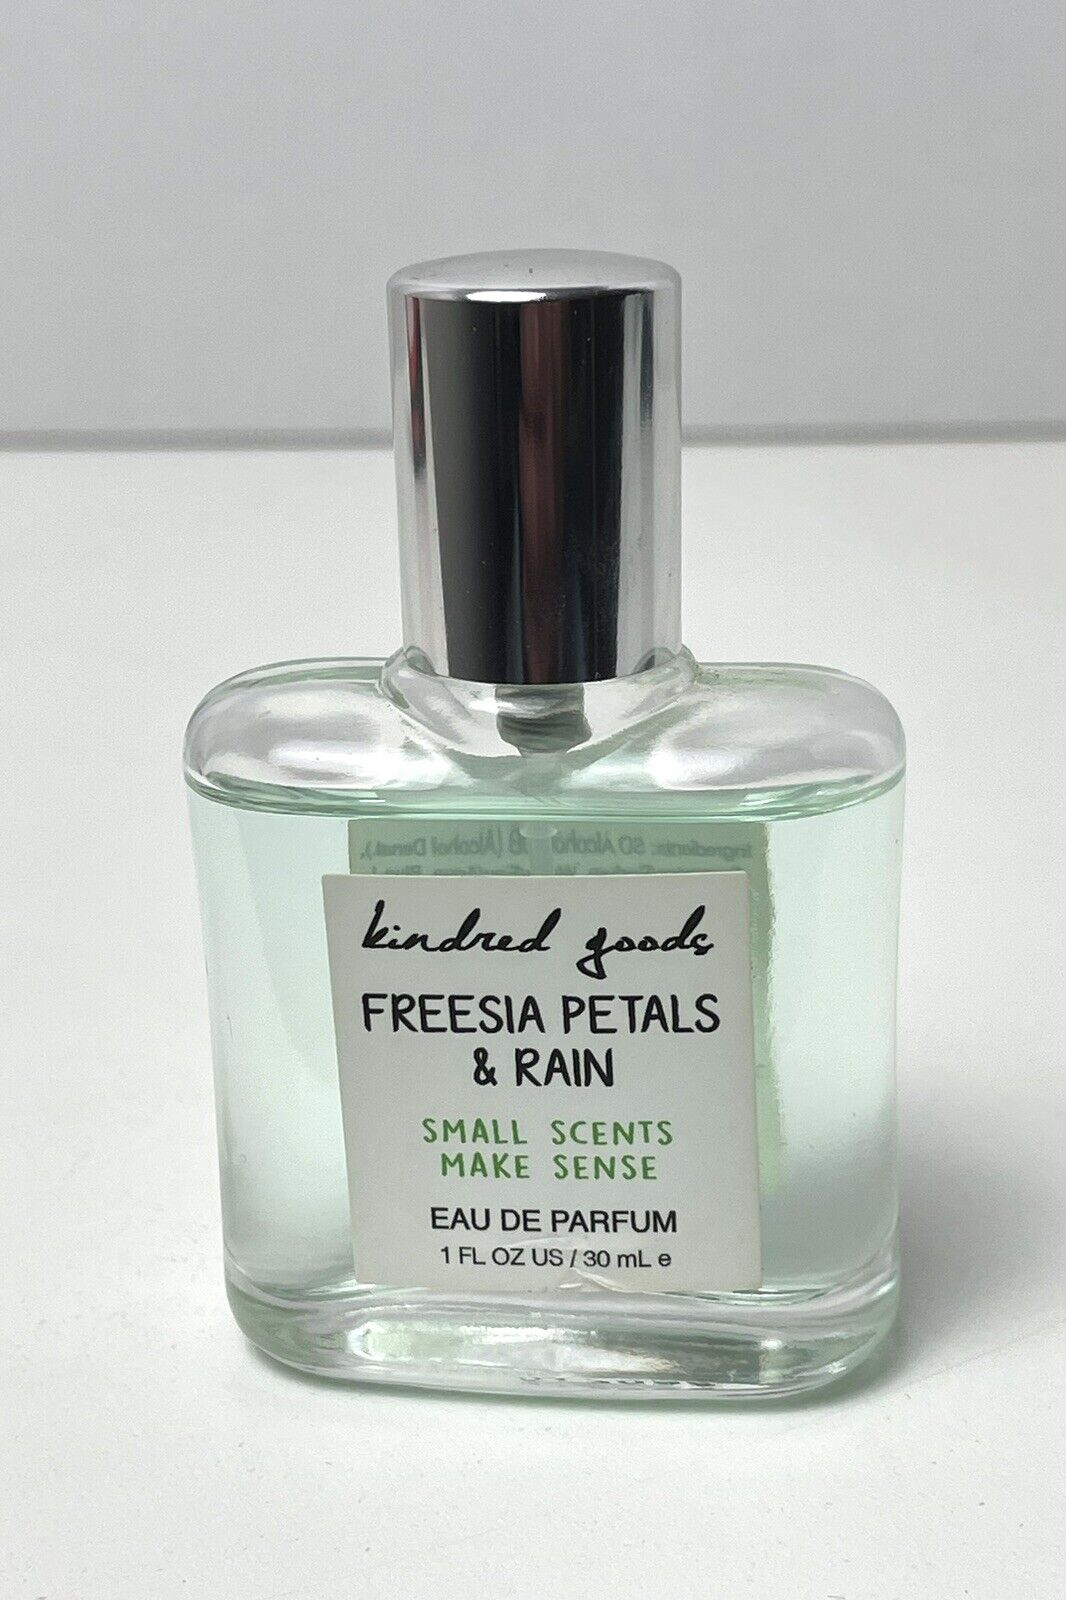 Kindred Goods Freesia Petals & Rain Fragrance Parfum Perfume Spray 1 oz Old Navy